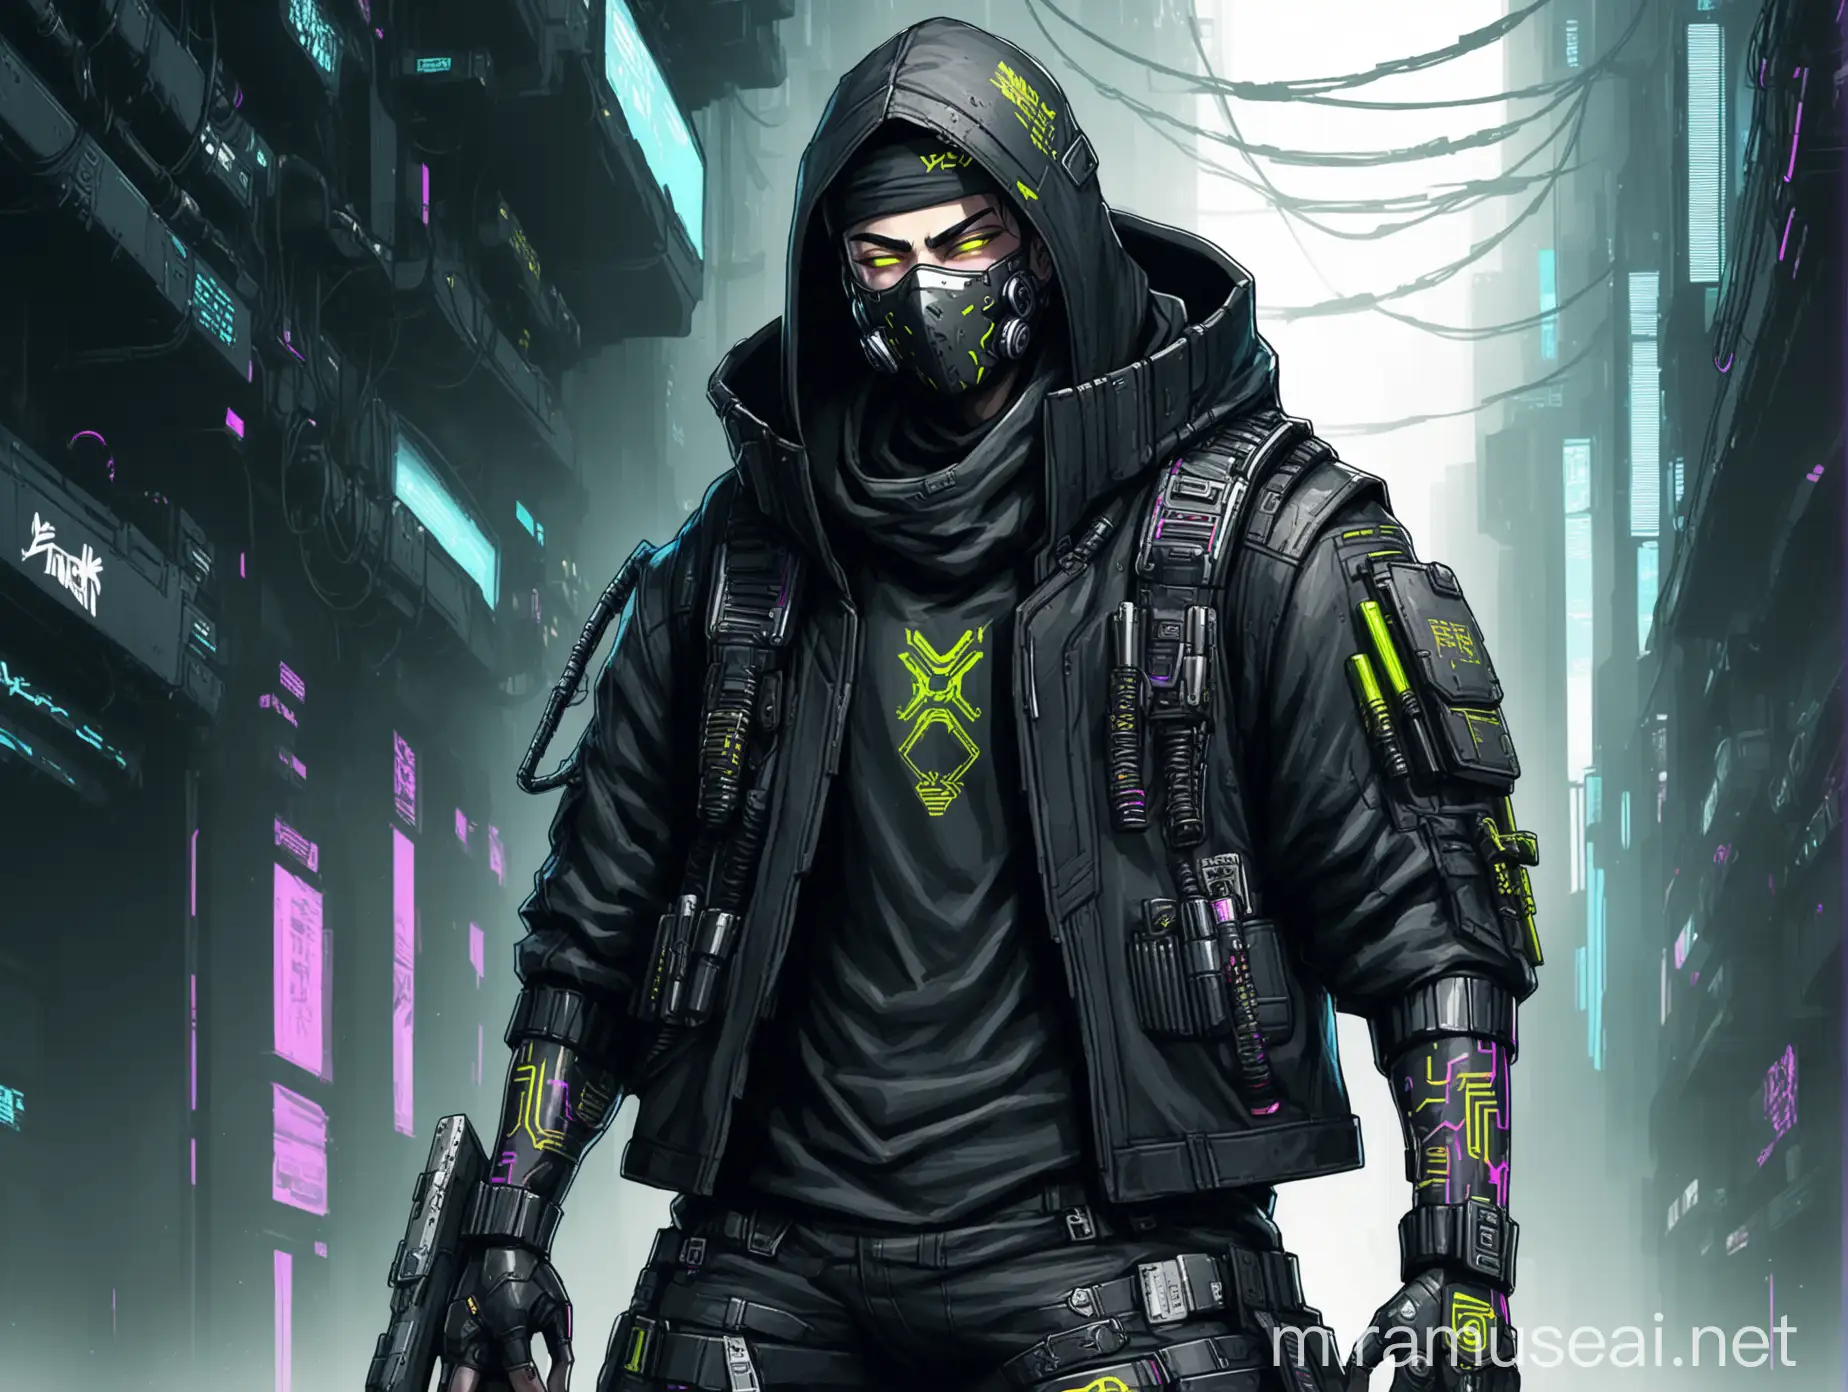 Futuristic Cyberpunk Ninja Boy in Warcore Attire